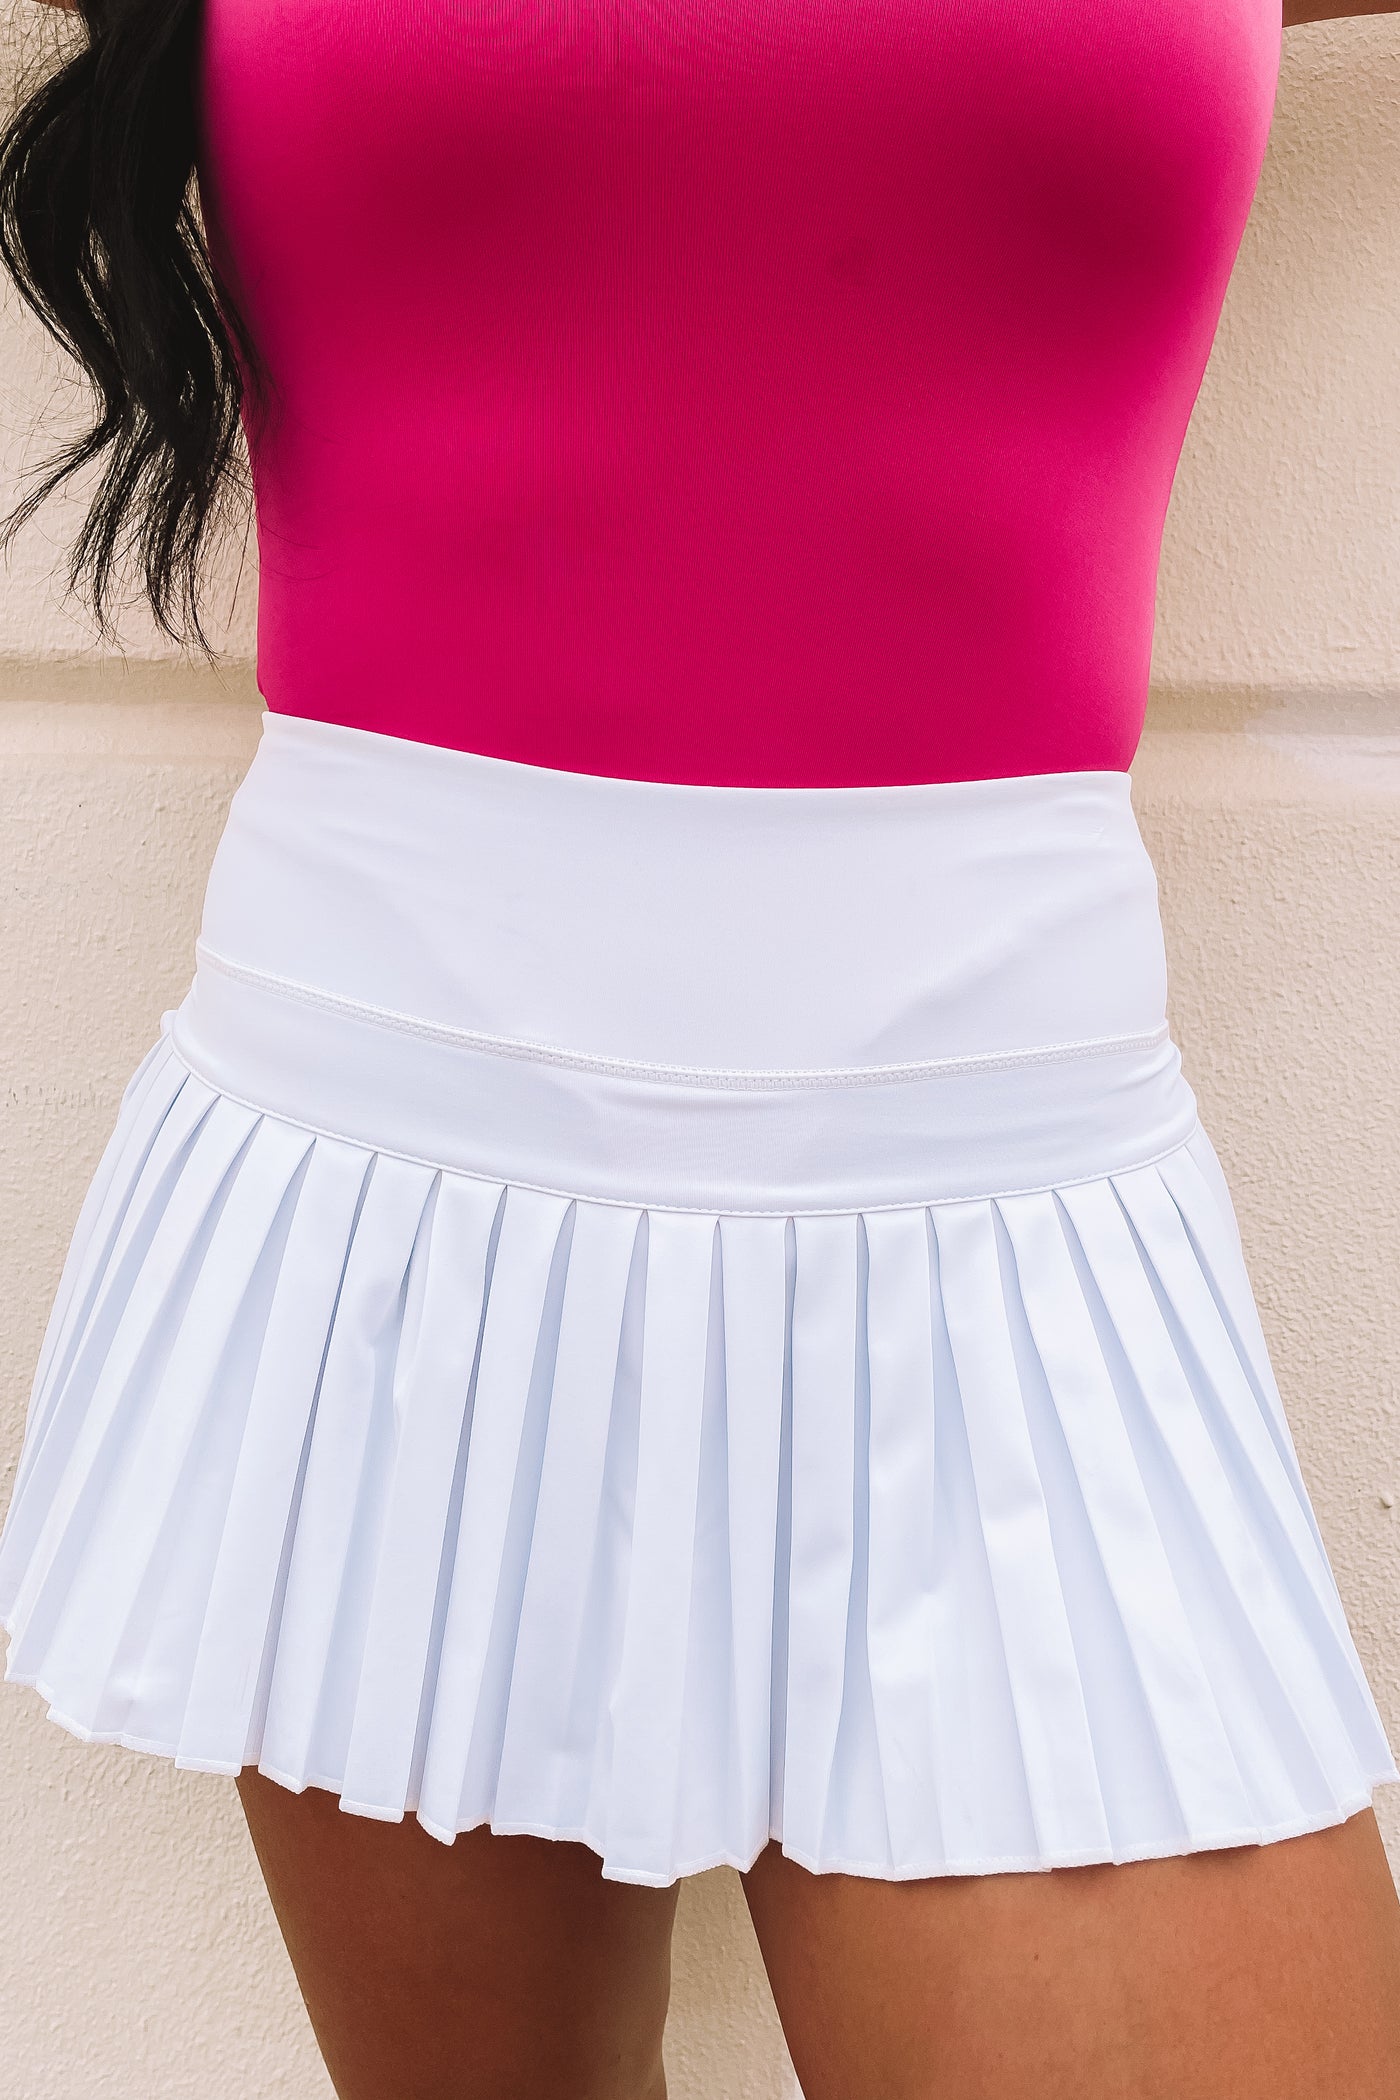 RESTOCK: Gold Hinge Pleated Tennis Skirt